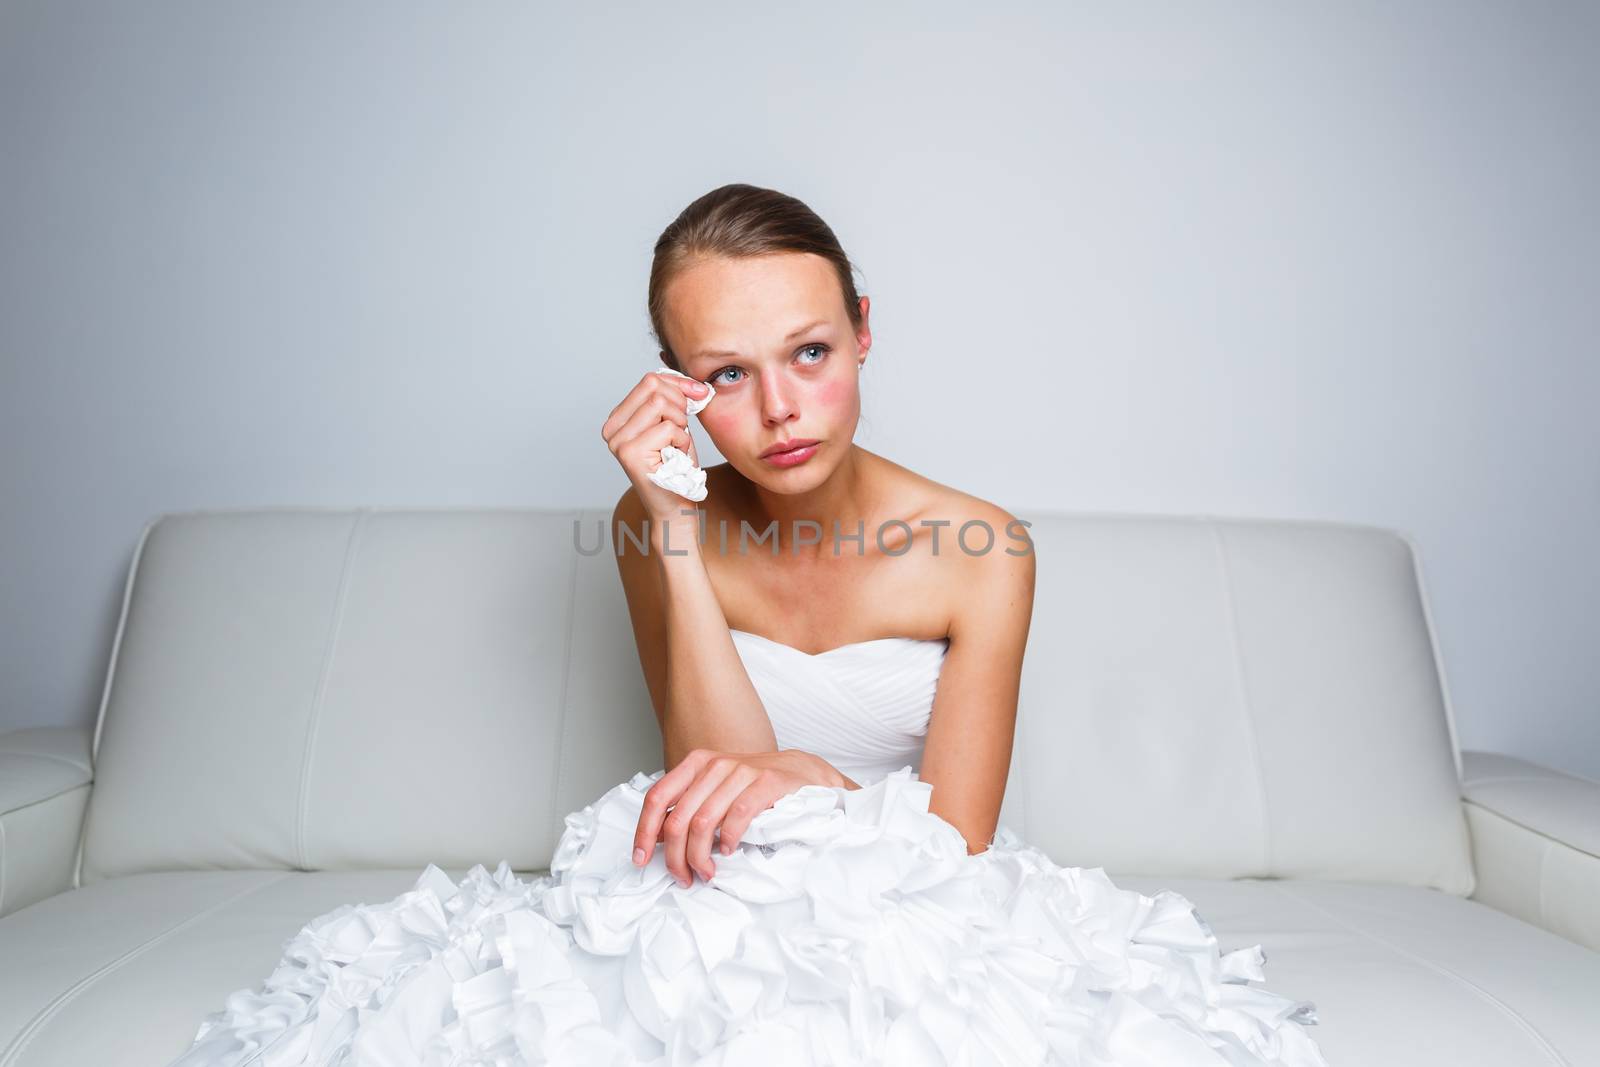 Sad bride crying